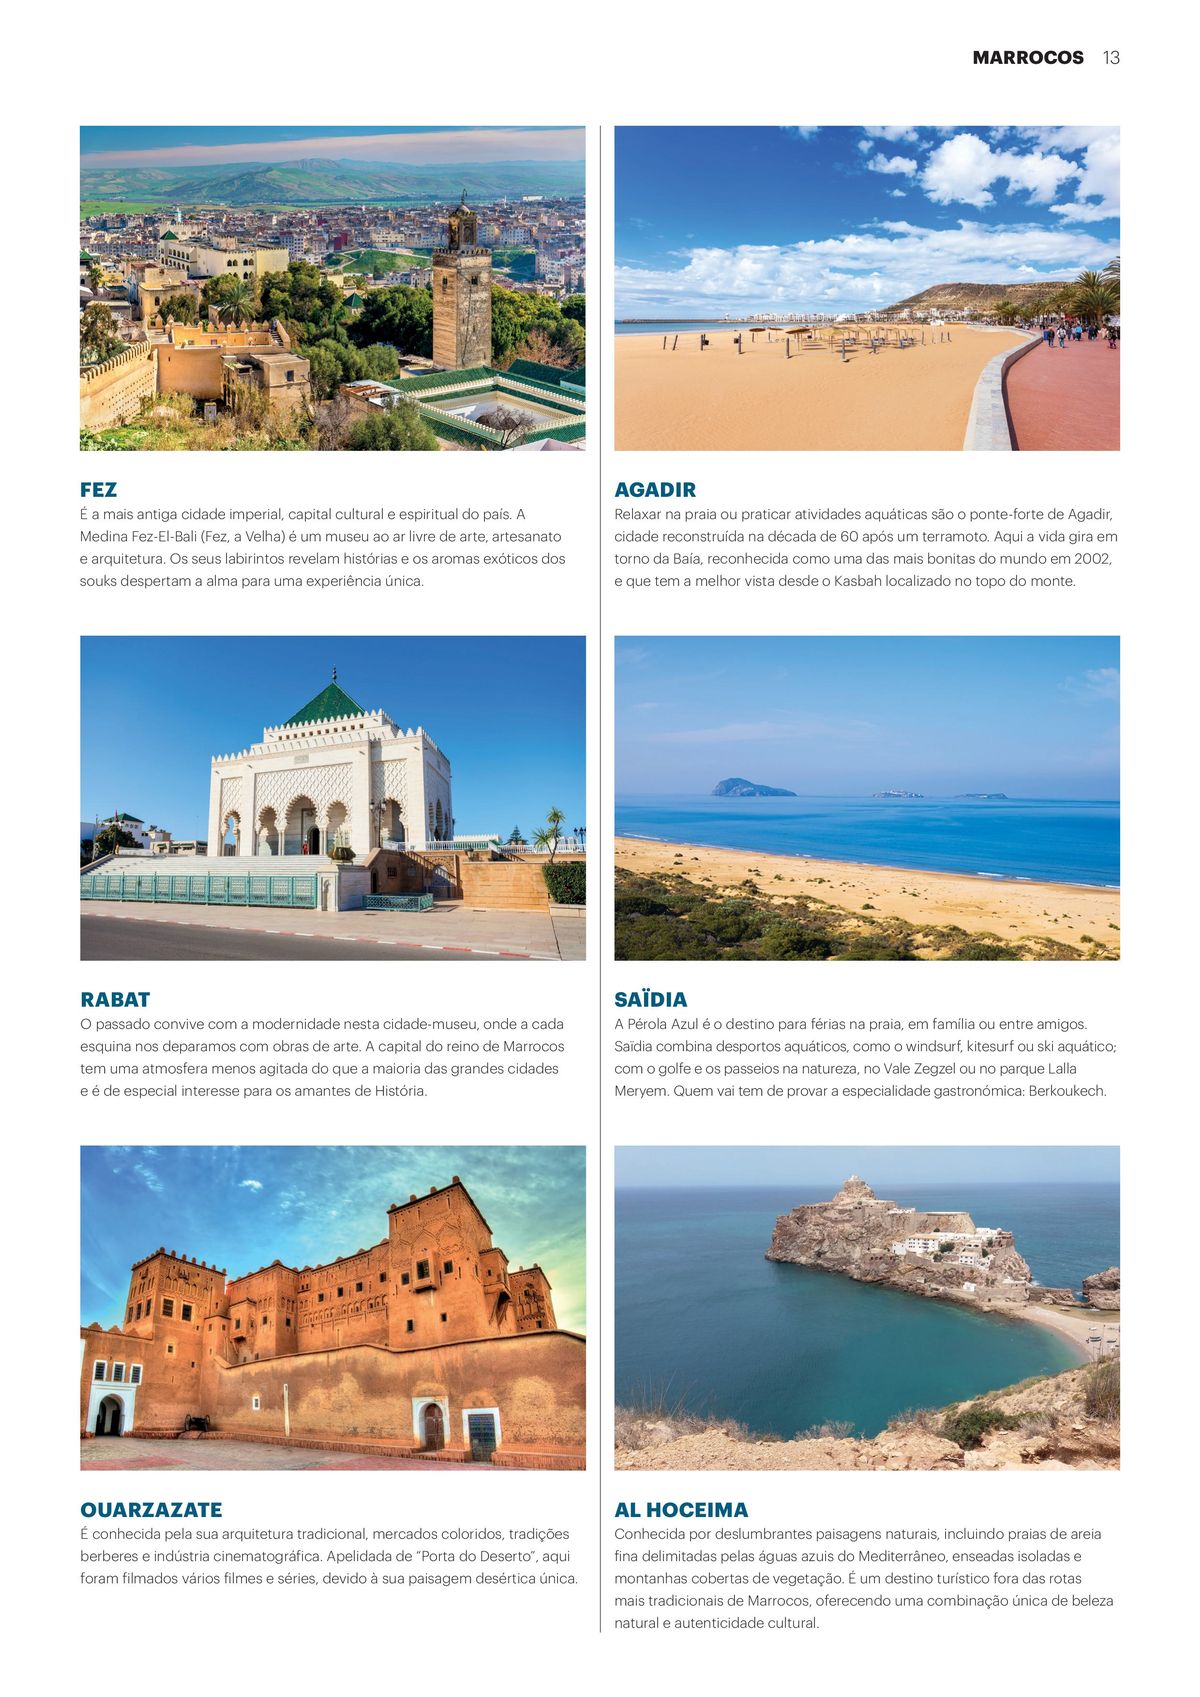 Desfrute das belezas naturais de Marrocos com descontos especiais